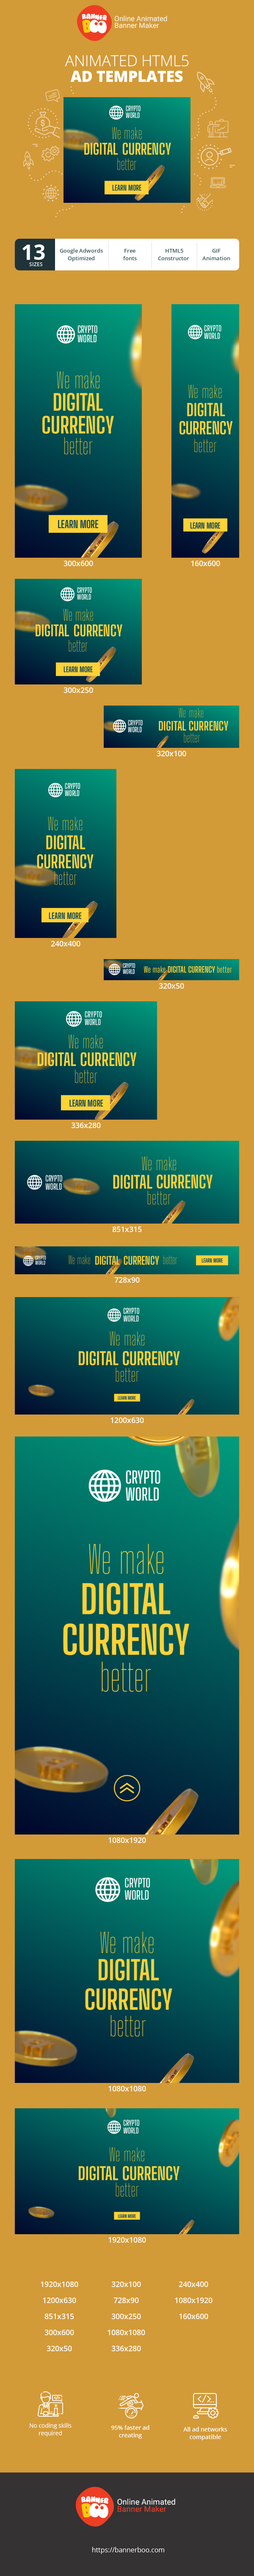 Szablon reklamy banerowej — We Make Digital Currency Better — Cryptocurrency